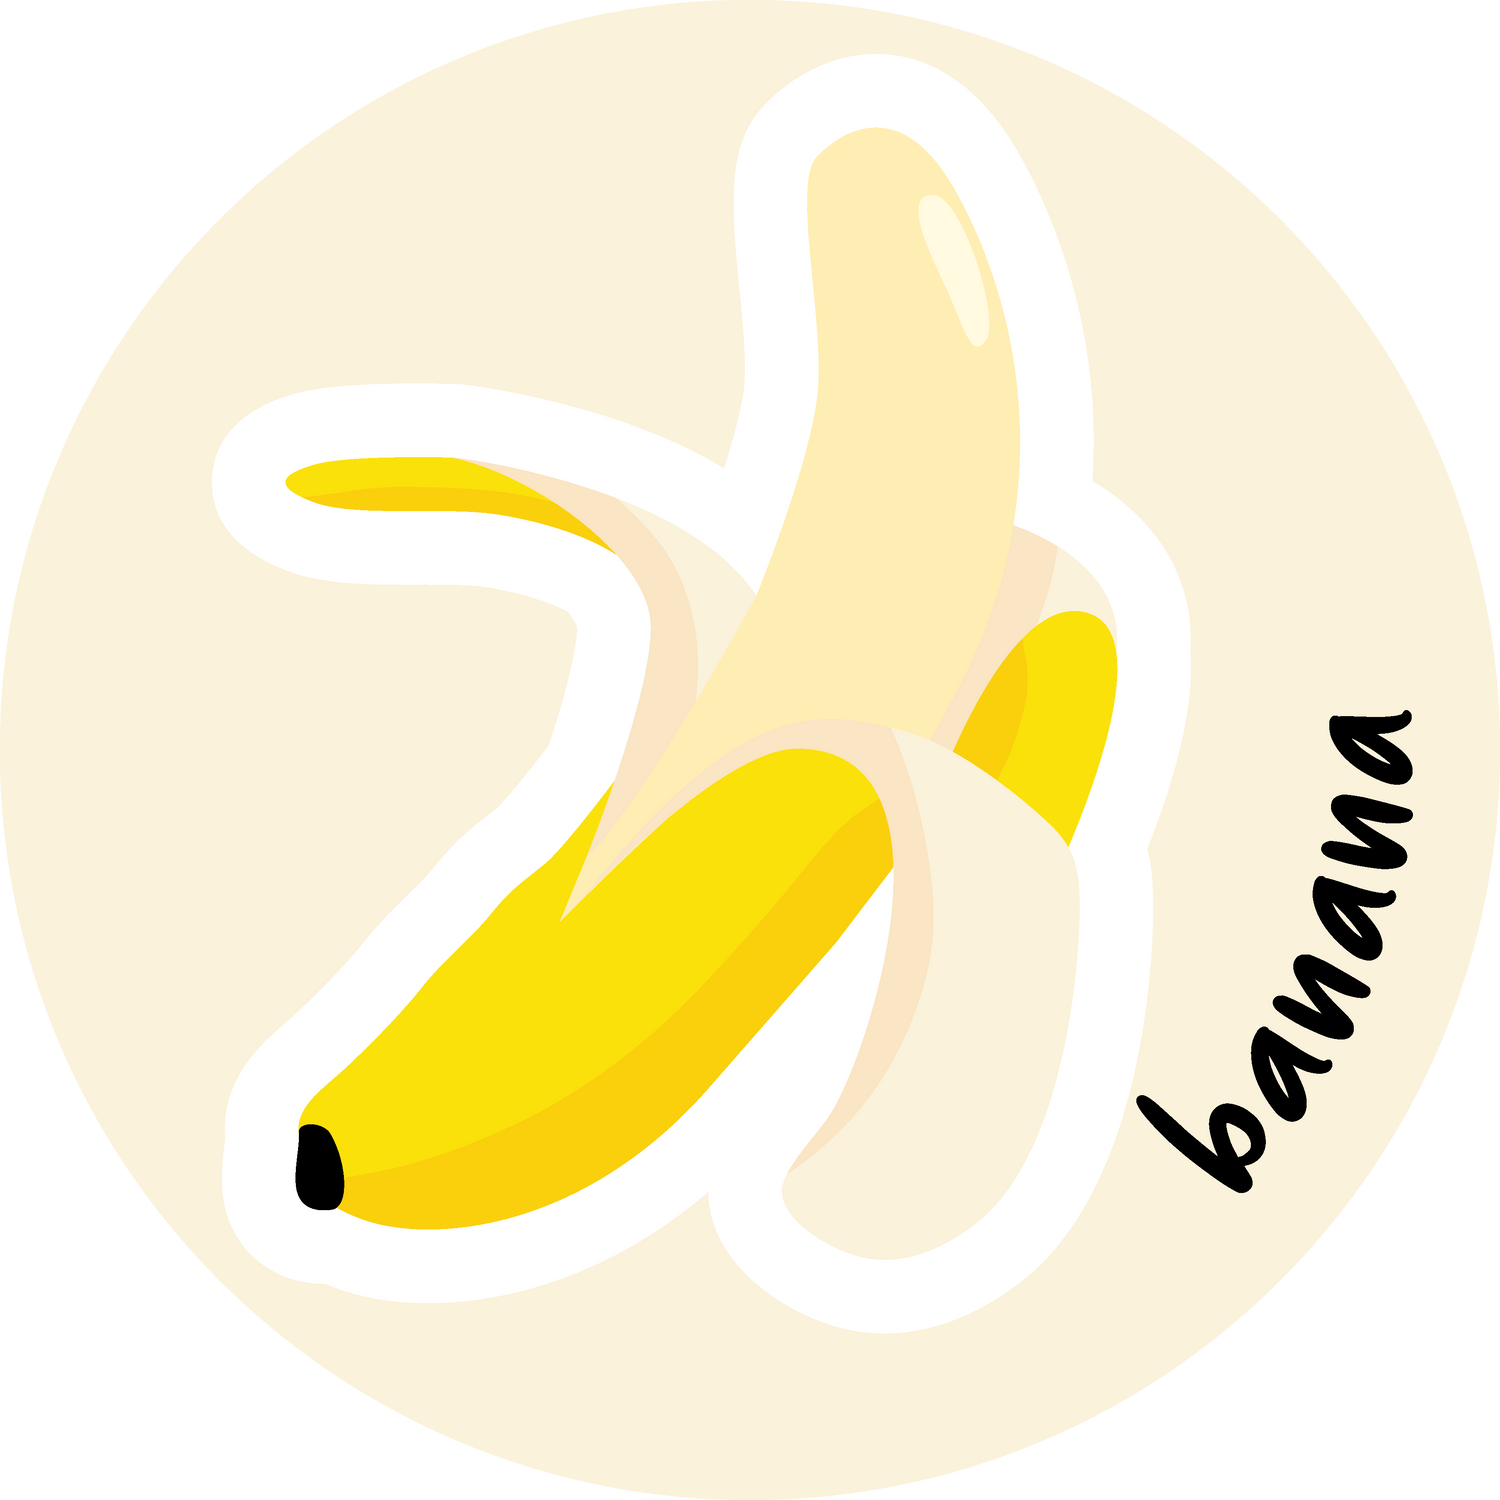 Mallow banana collection